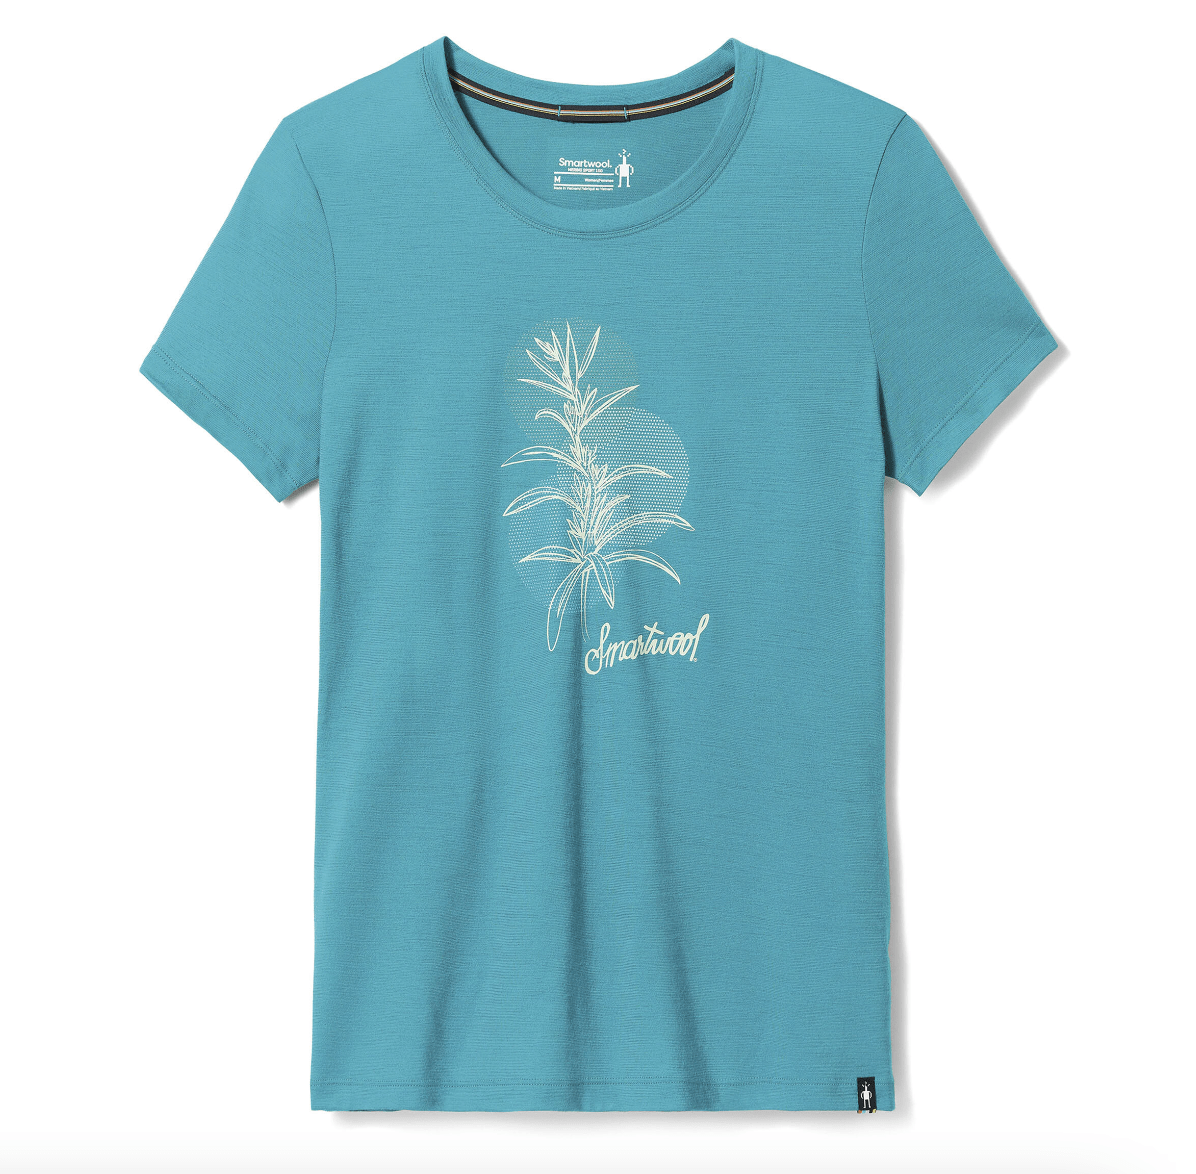 Smartwool T-Shirt S / Deep Lake Smartwool Women’s Sage Plant Graphic Short Sleeve Tee Slim Fit